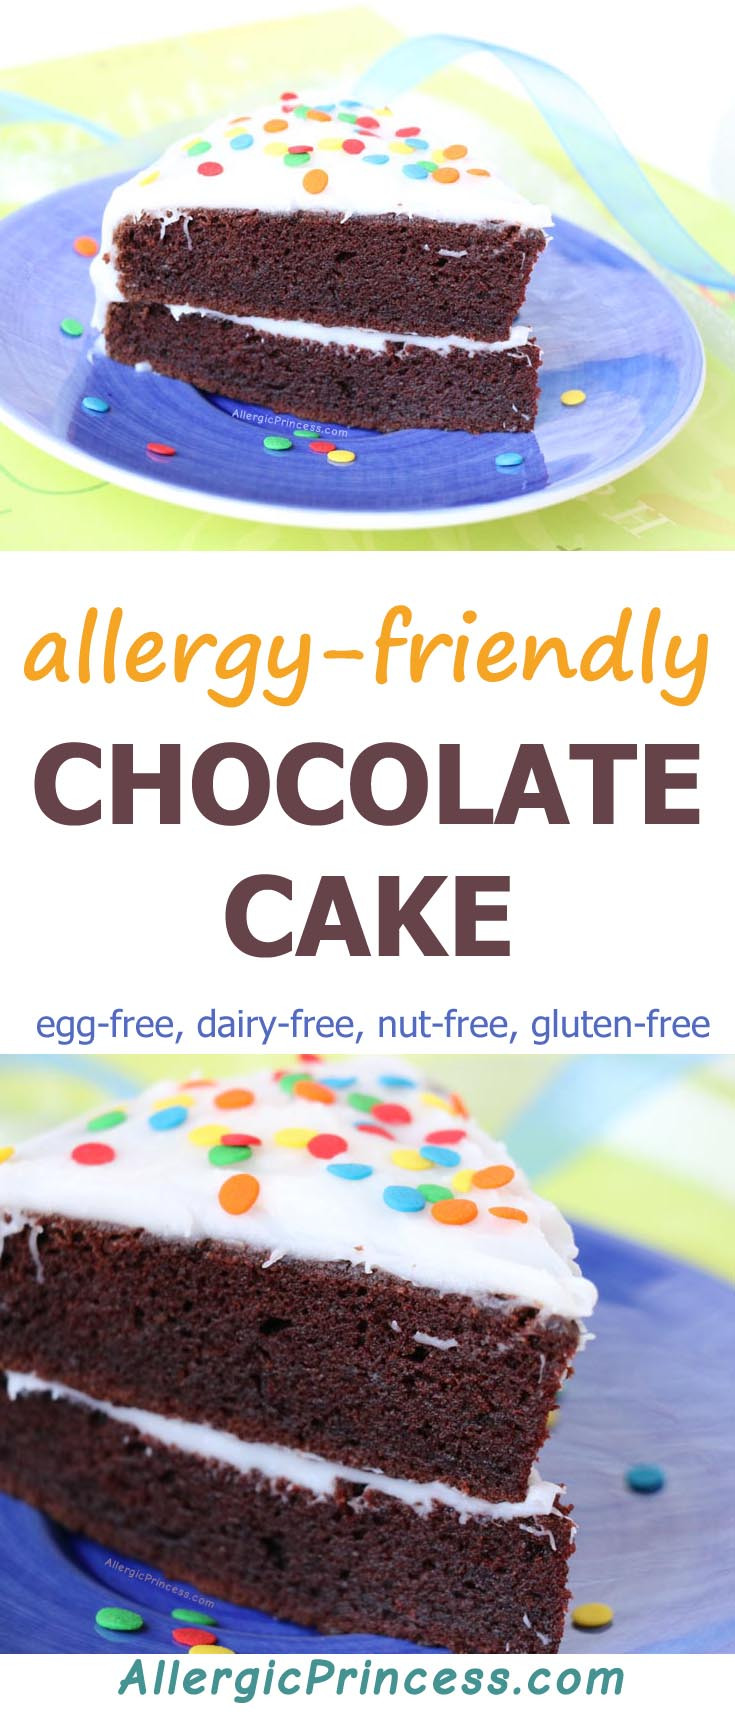 Gluten Free Dairy Free Egg Free Recipes
 EGG FREE DAIRY FREE NUT FREE GLUTEN FREE CHOCOLATE CAKE